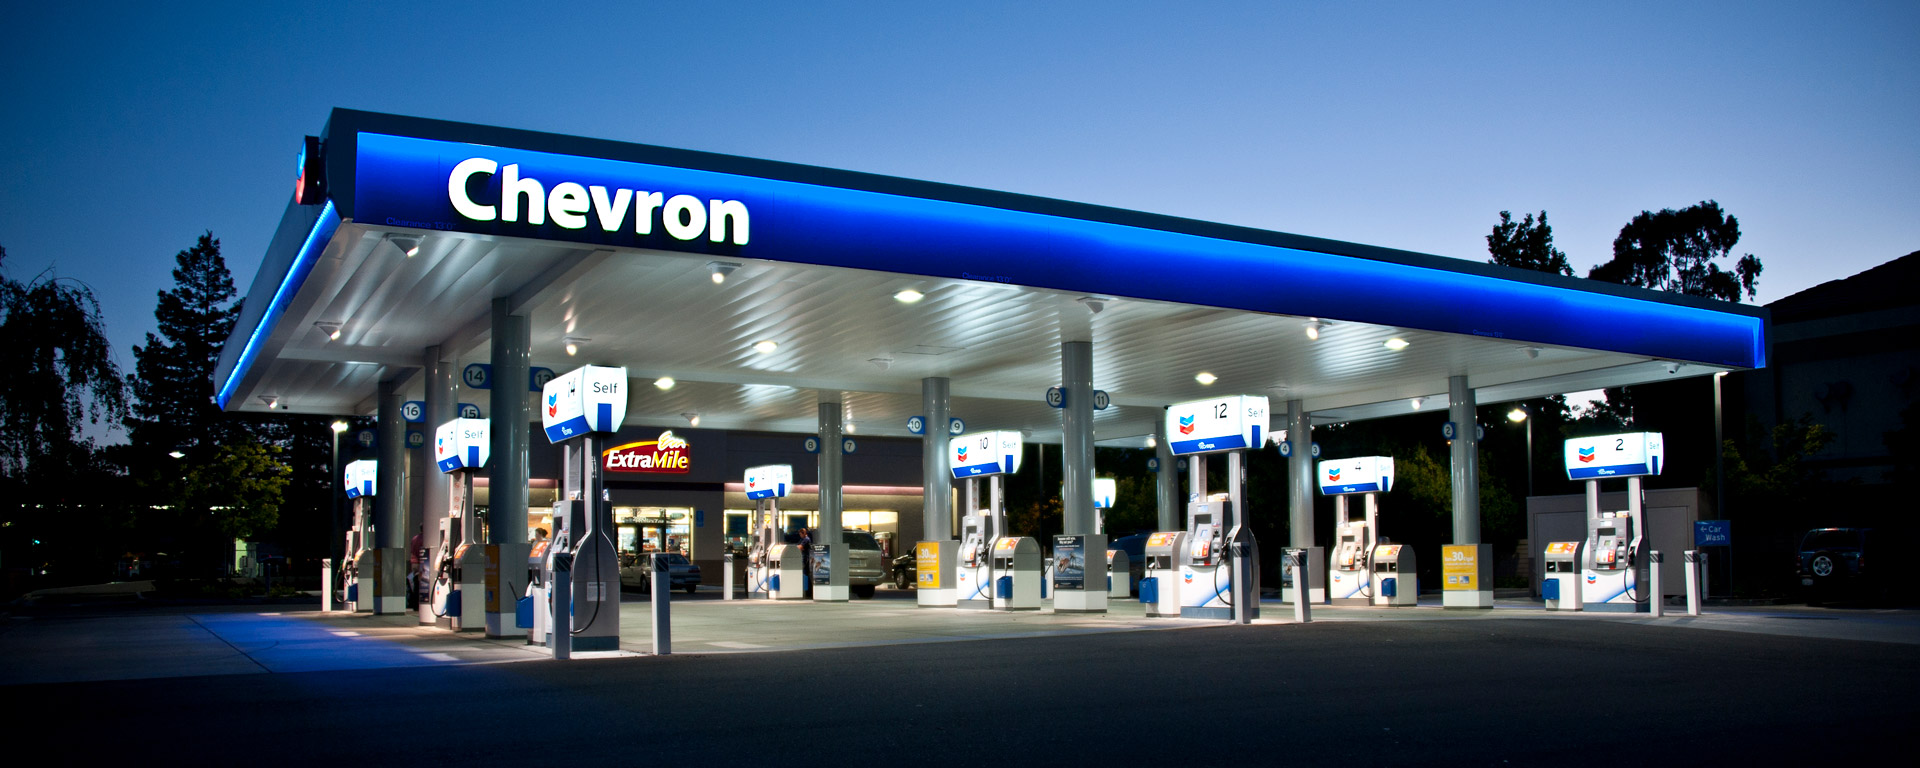 Chevron service station at night